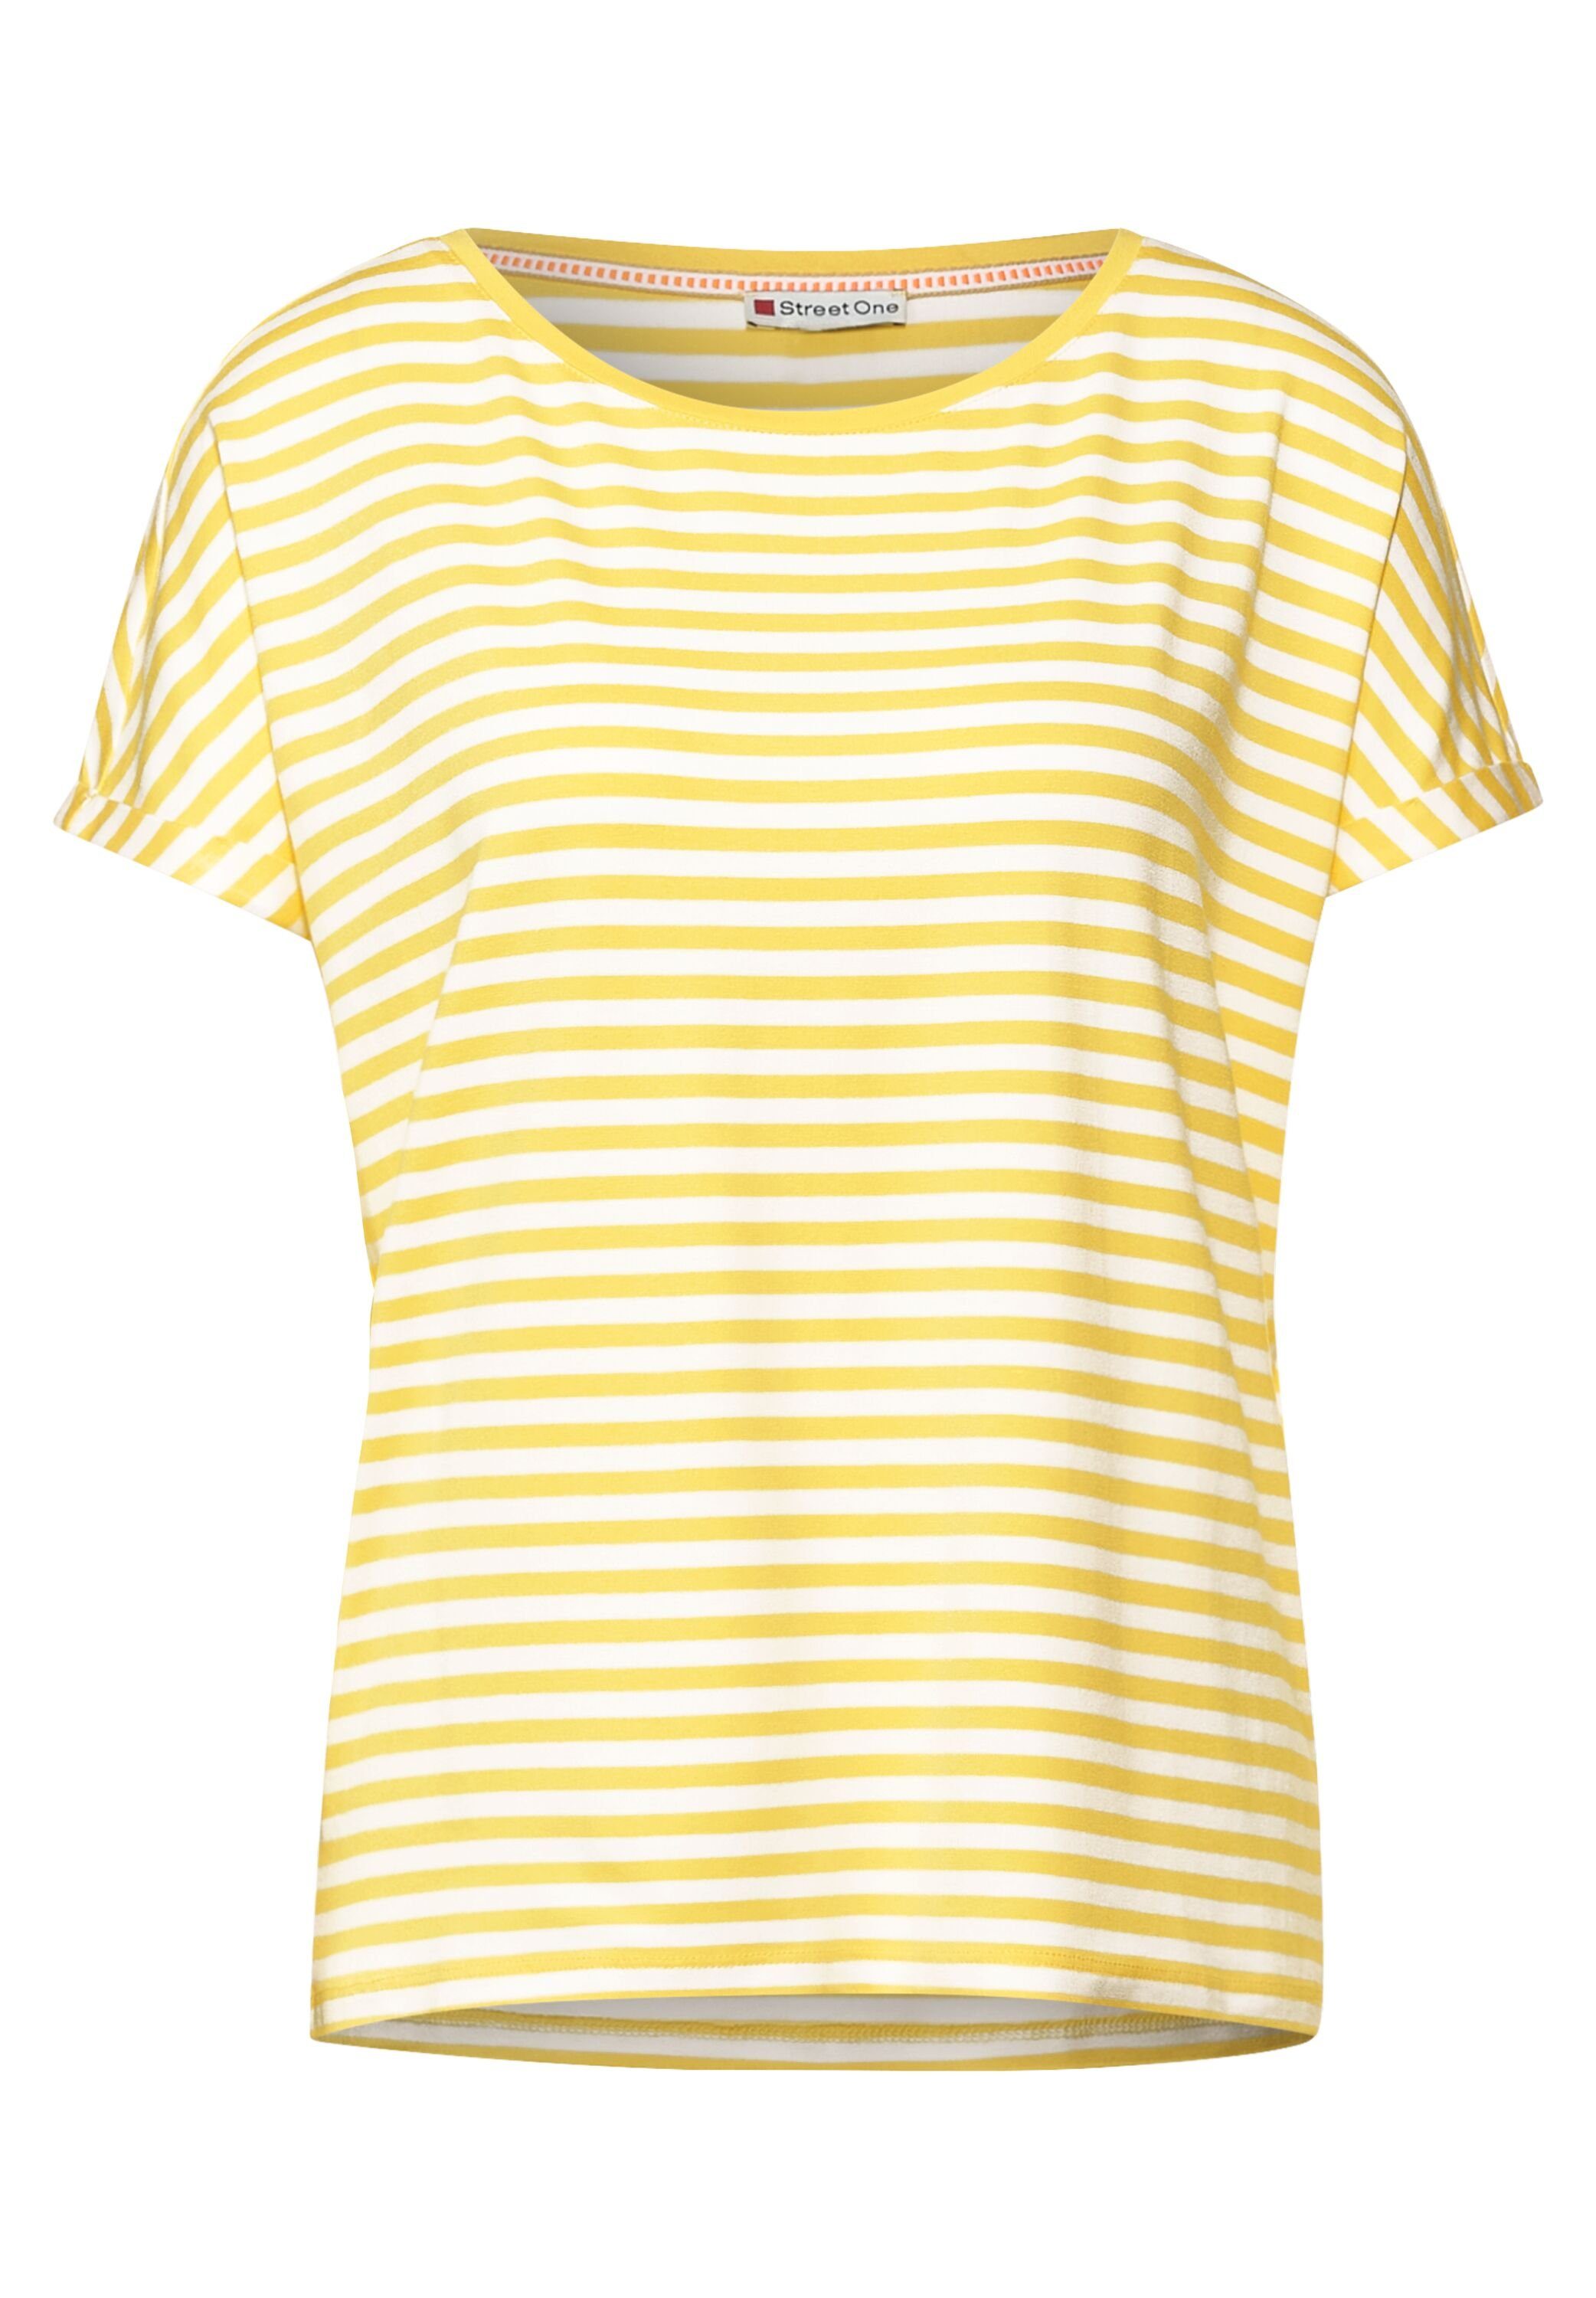 Locker T One in T-Shirt Ye Merry ONE merry STREET yellow Muster mit Streifen geschnitten (1-tlg) Street Shirt